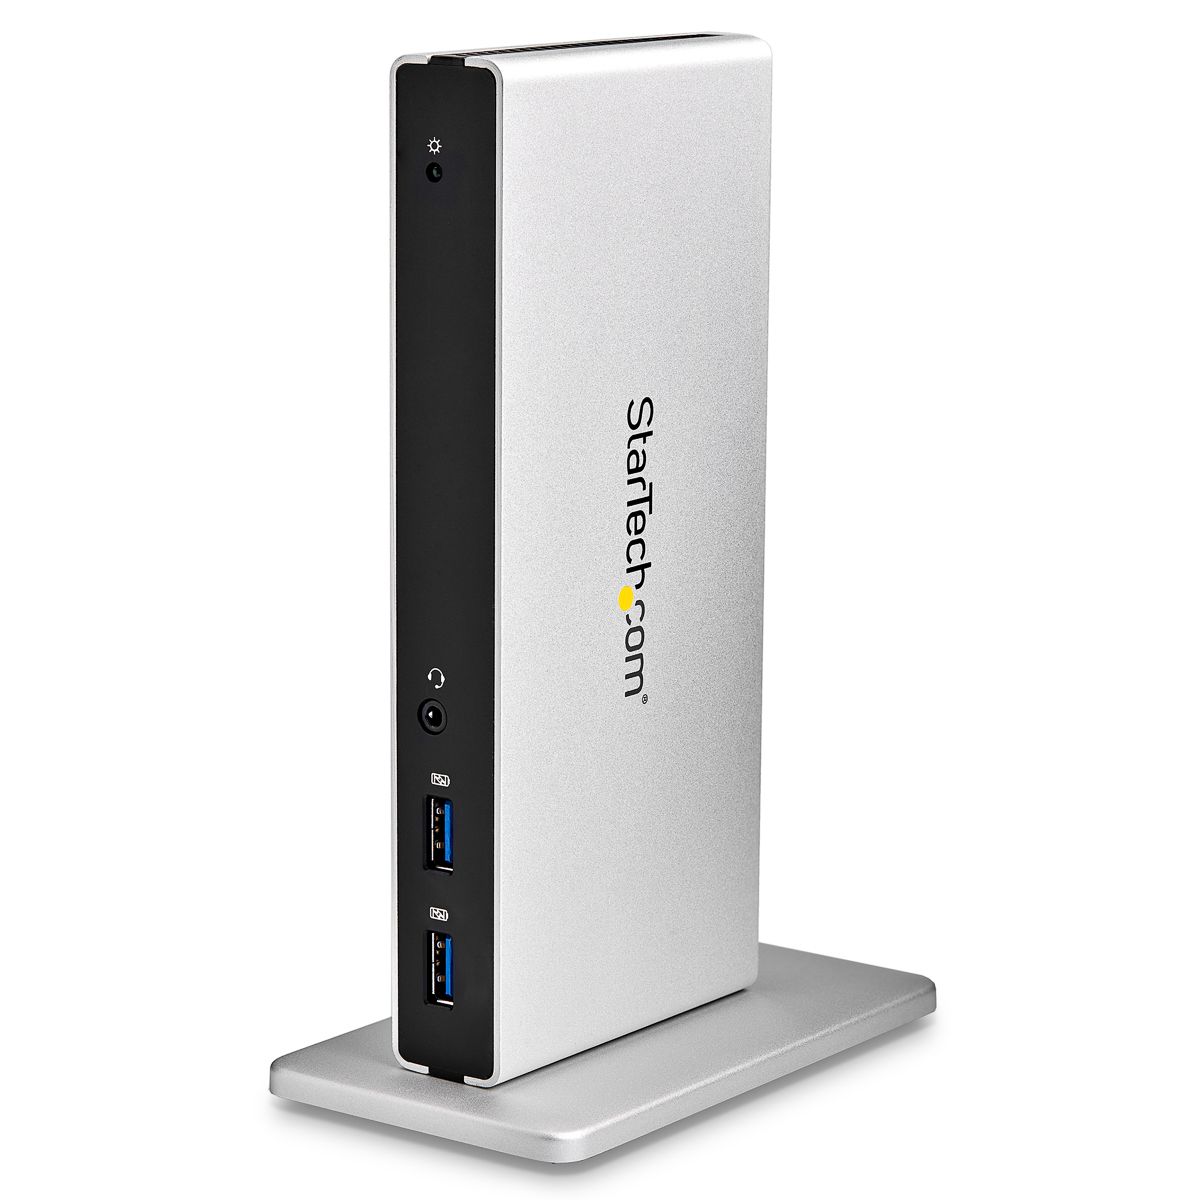 StarTech.com Dual Monitor USB 3.0 Docking Station with DVI, HDMI, VGA - 6 x USB ports, USB A, USB B